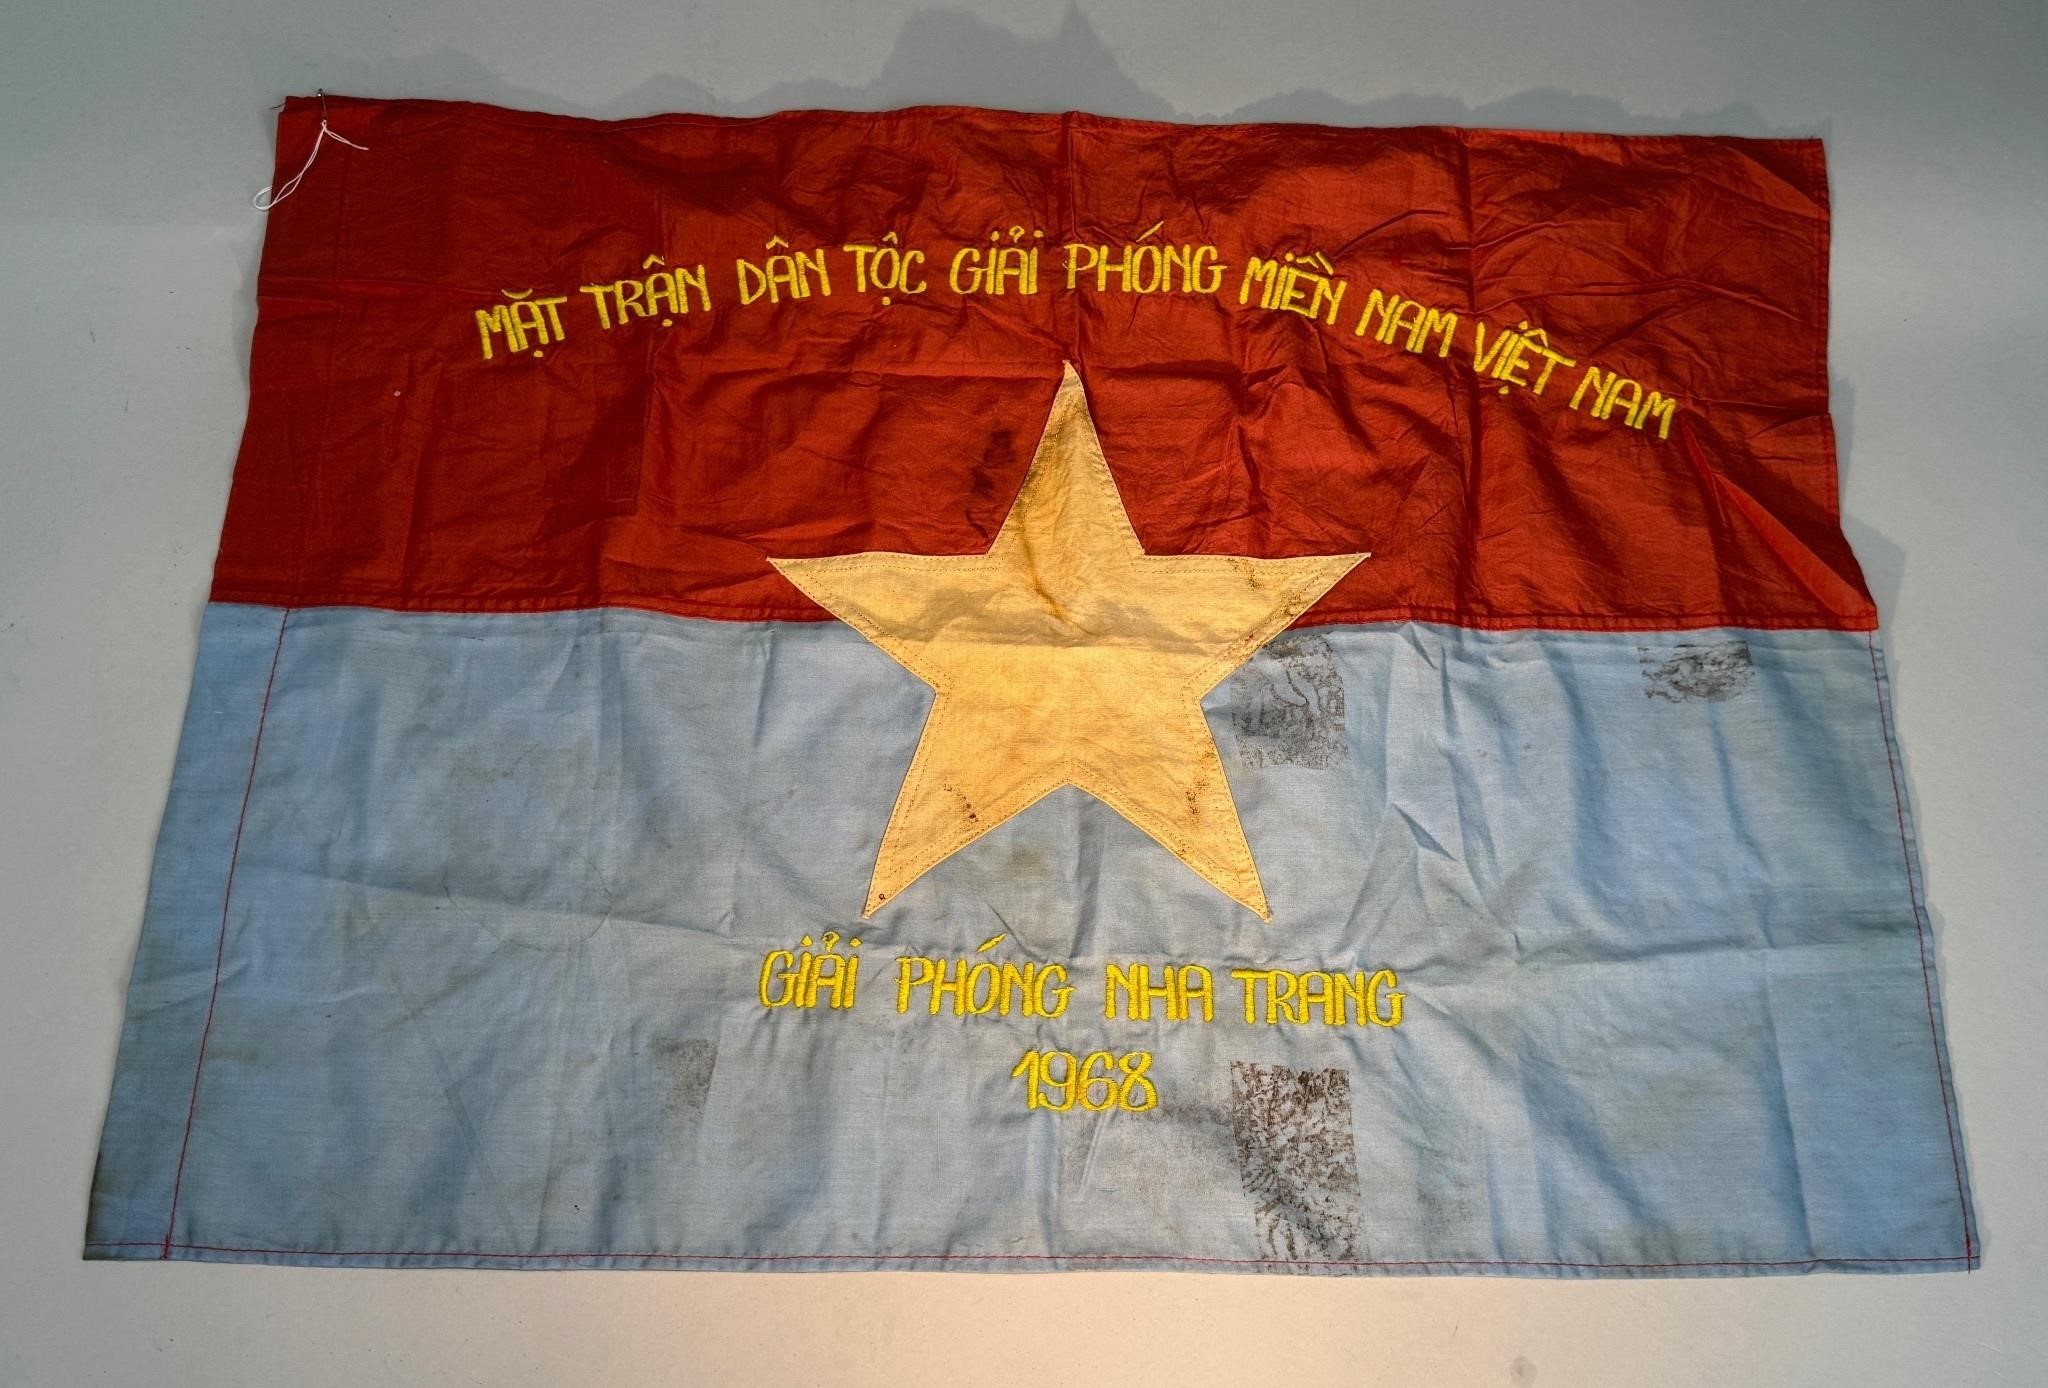 Viet Nam Era Viet Cong VC 1968 Combat Battle Flag